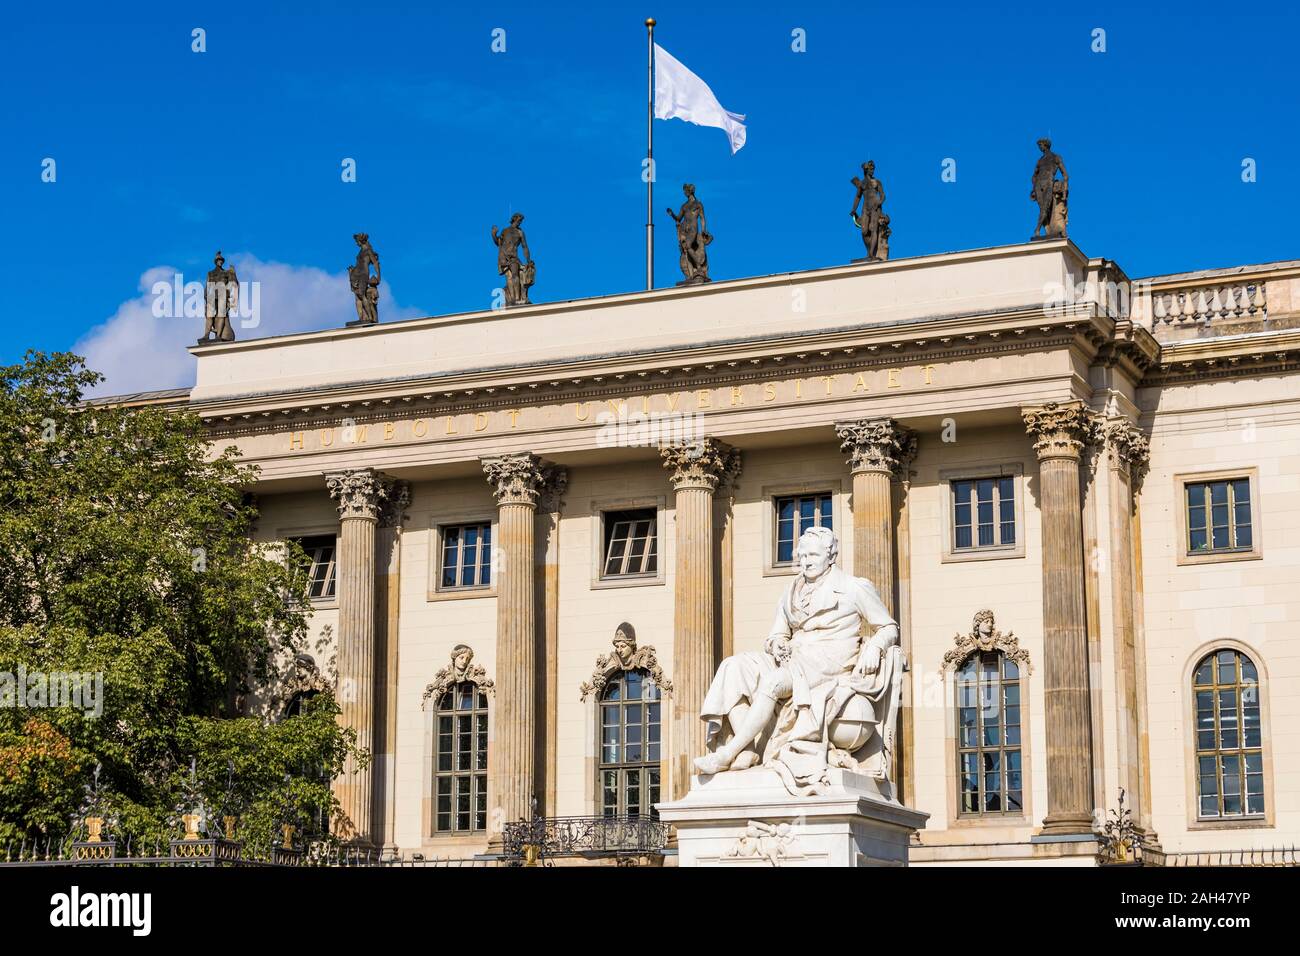 Germania, Berlino Mitte, Unter den Linden, Università Humboldt di Berlino e Alexander von Humboldt statua Foto Stock